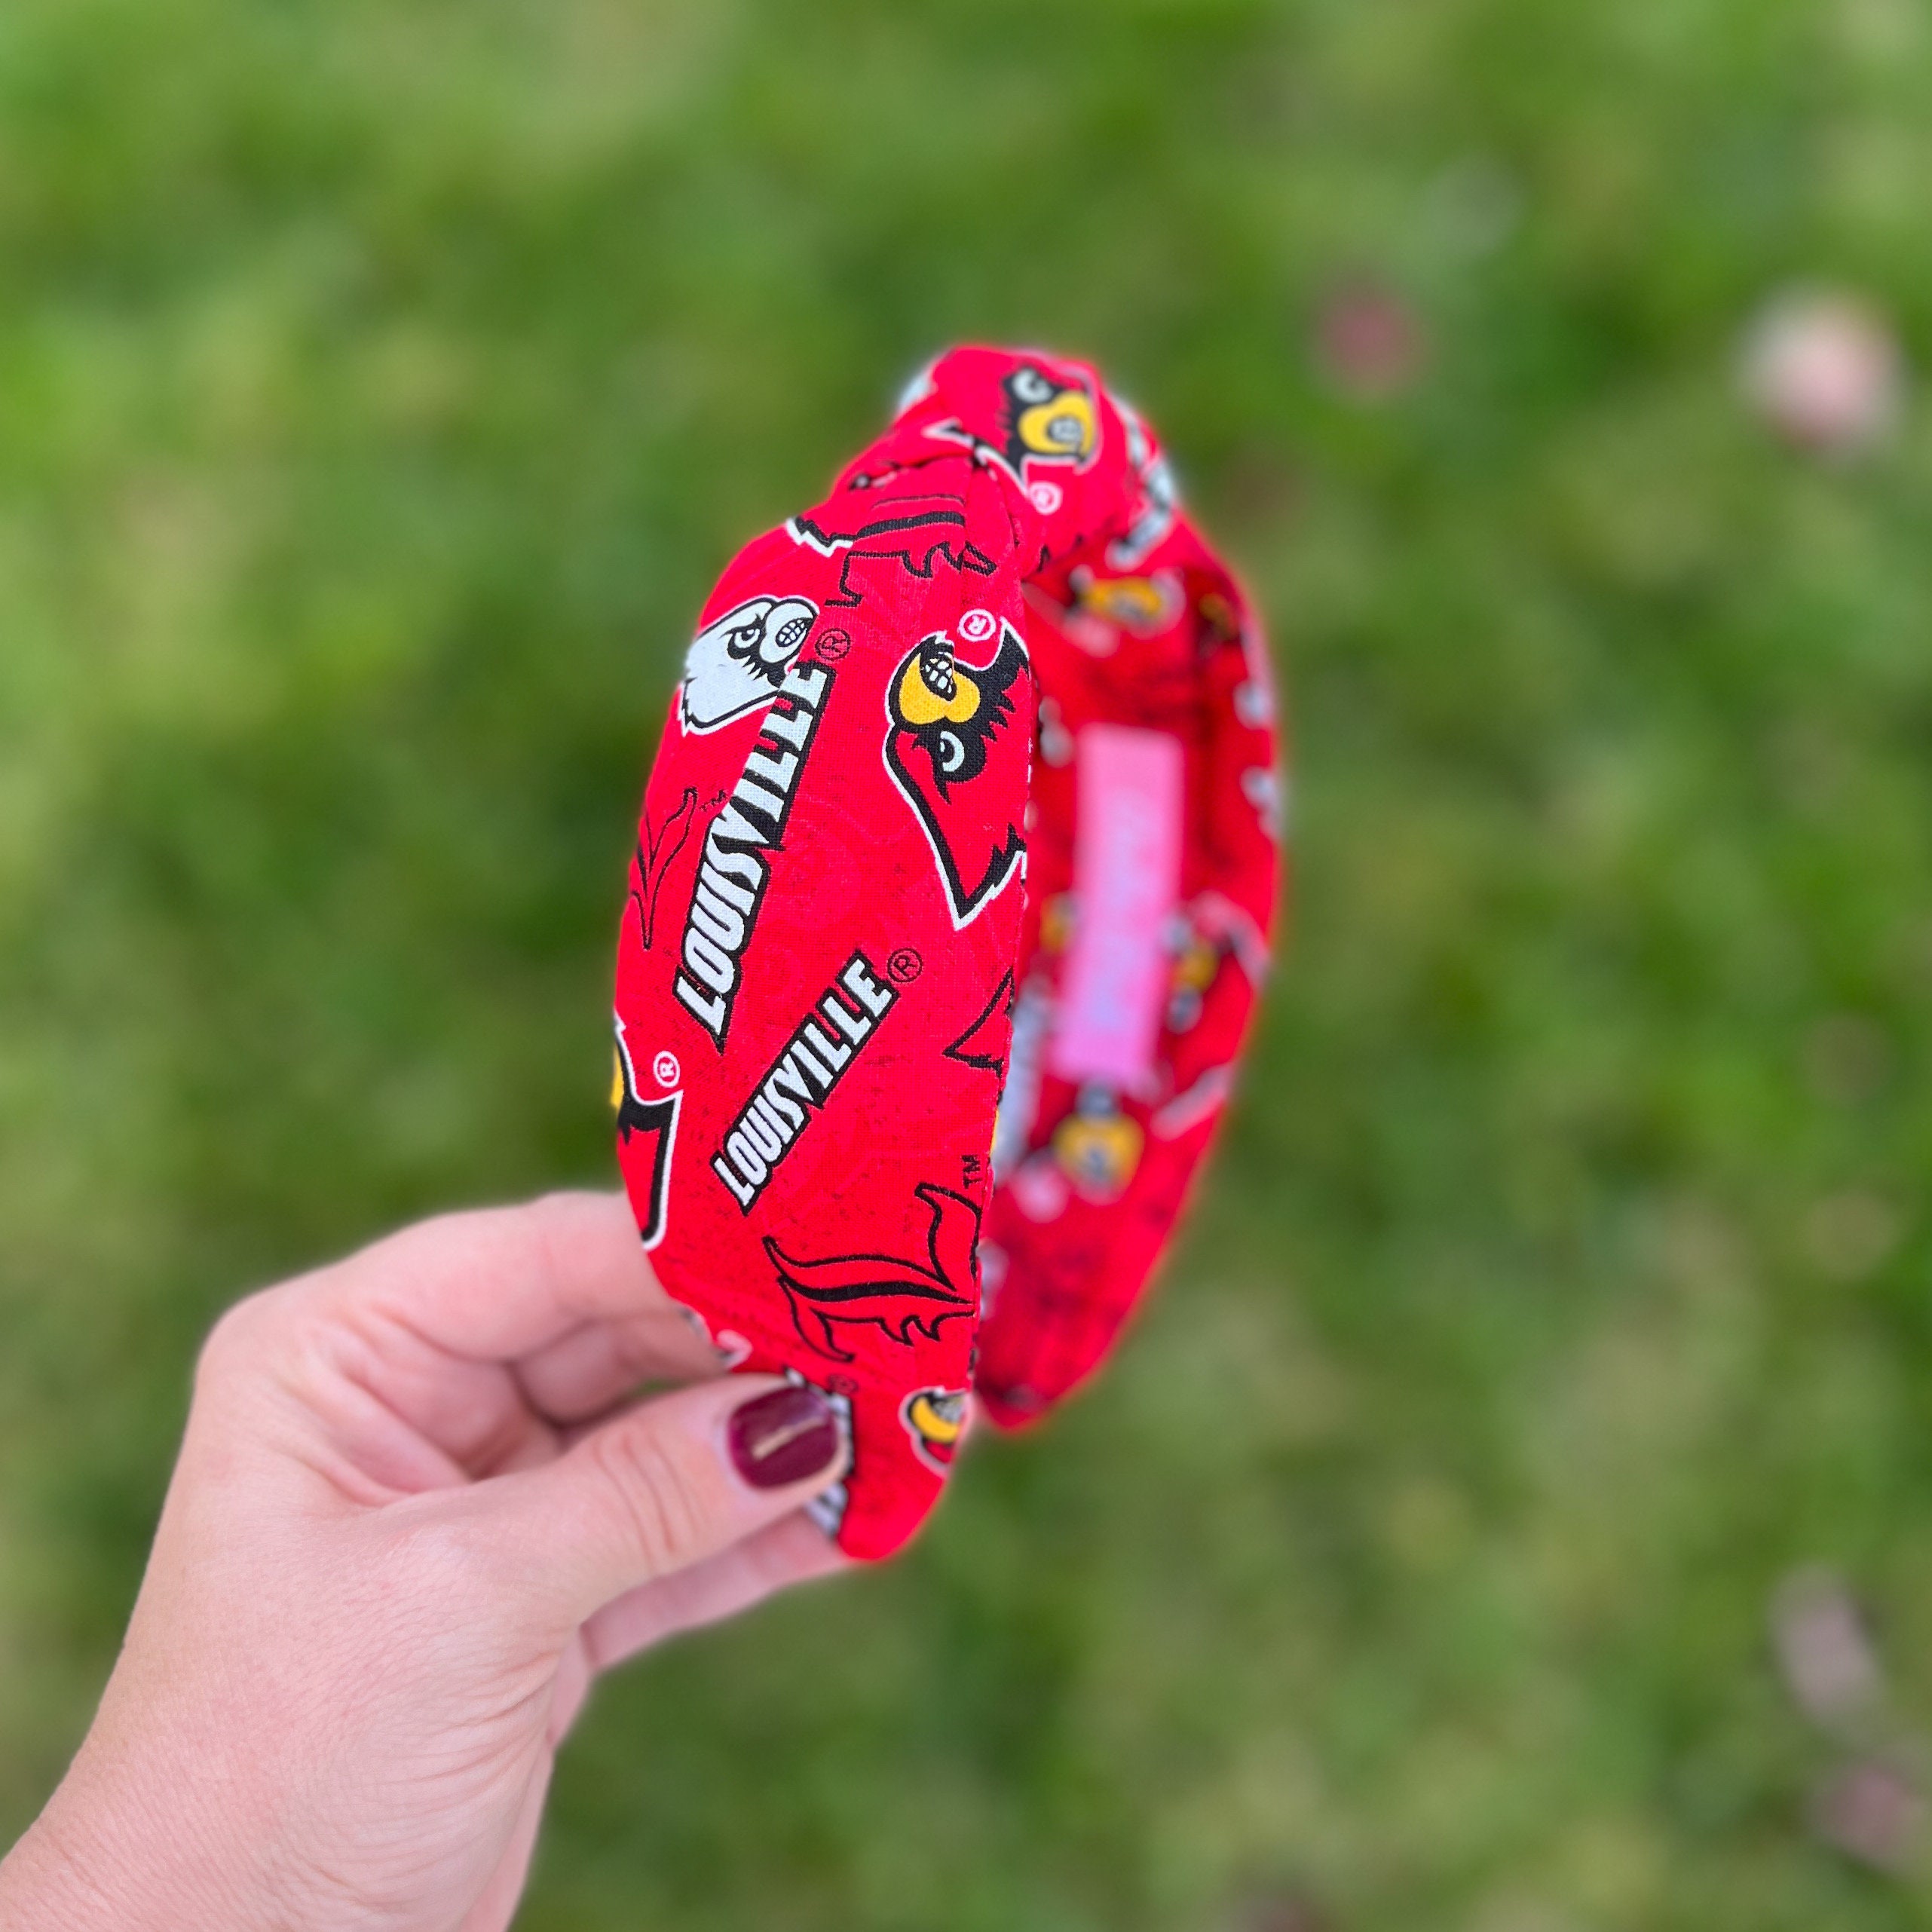 Louisville Cardinals adidas Headband Unisex Red New 